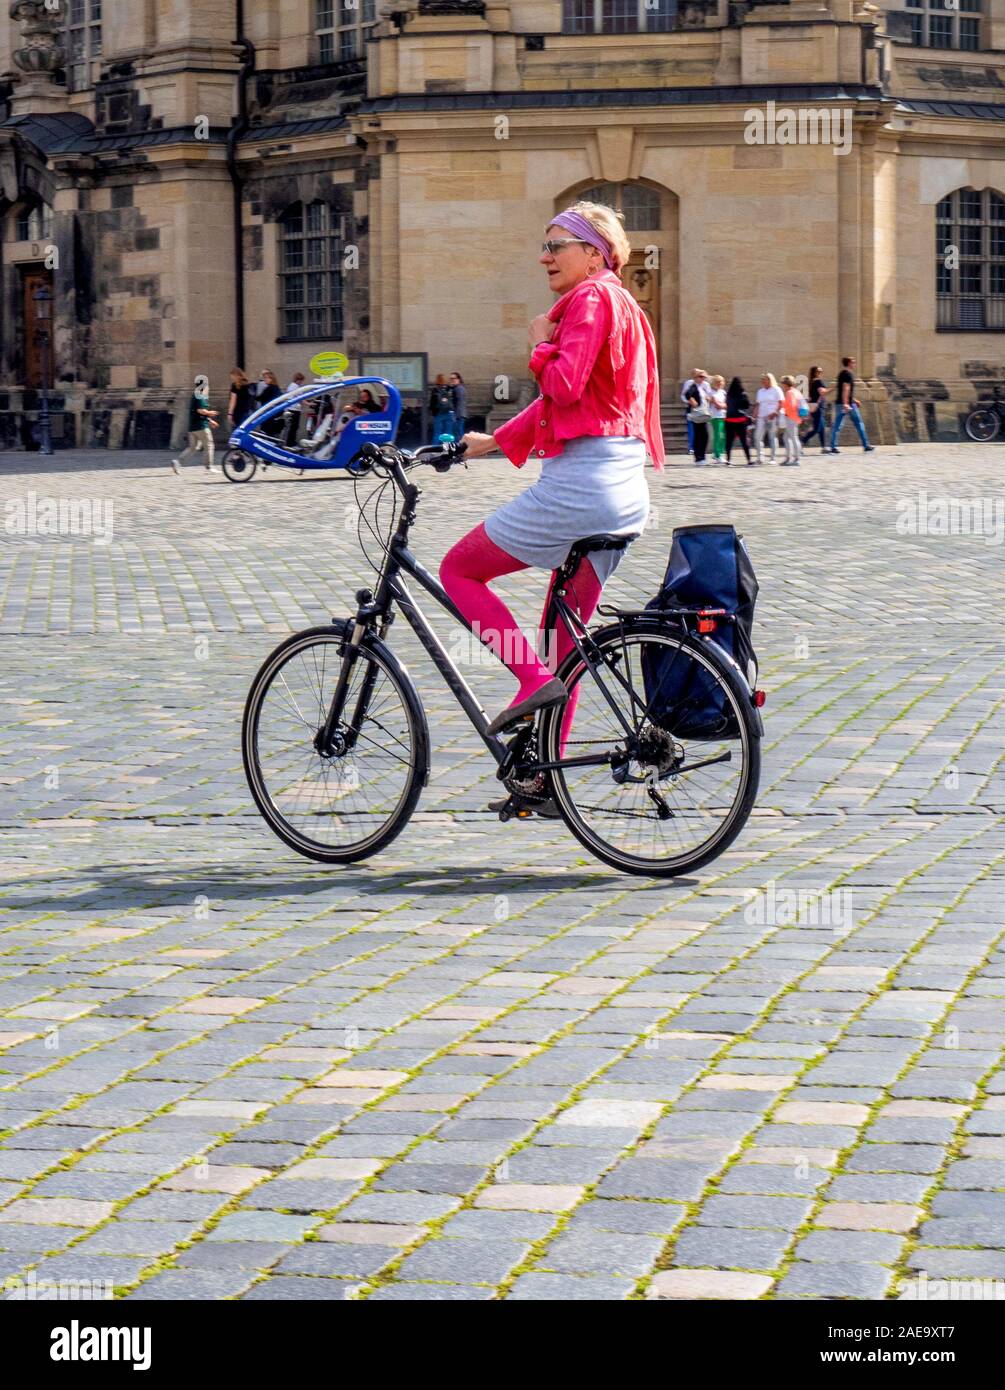 Senior Caucasian woman wearing pink jacket and stockings cycling her bicycle across Platz Neumarkt Newmarket Altstadt Dresden Saxony Germany. Stock Photo